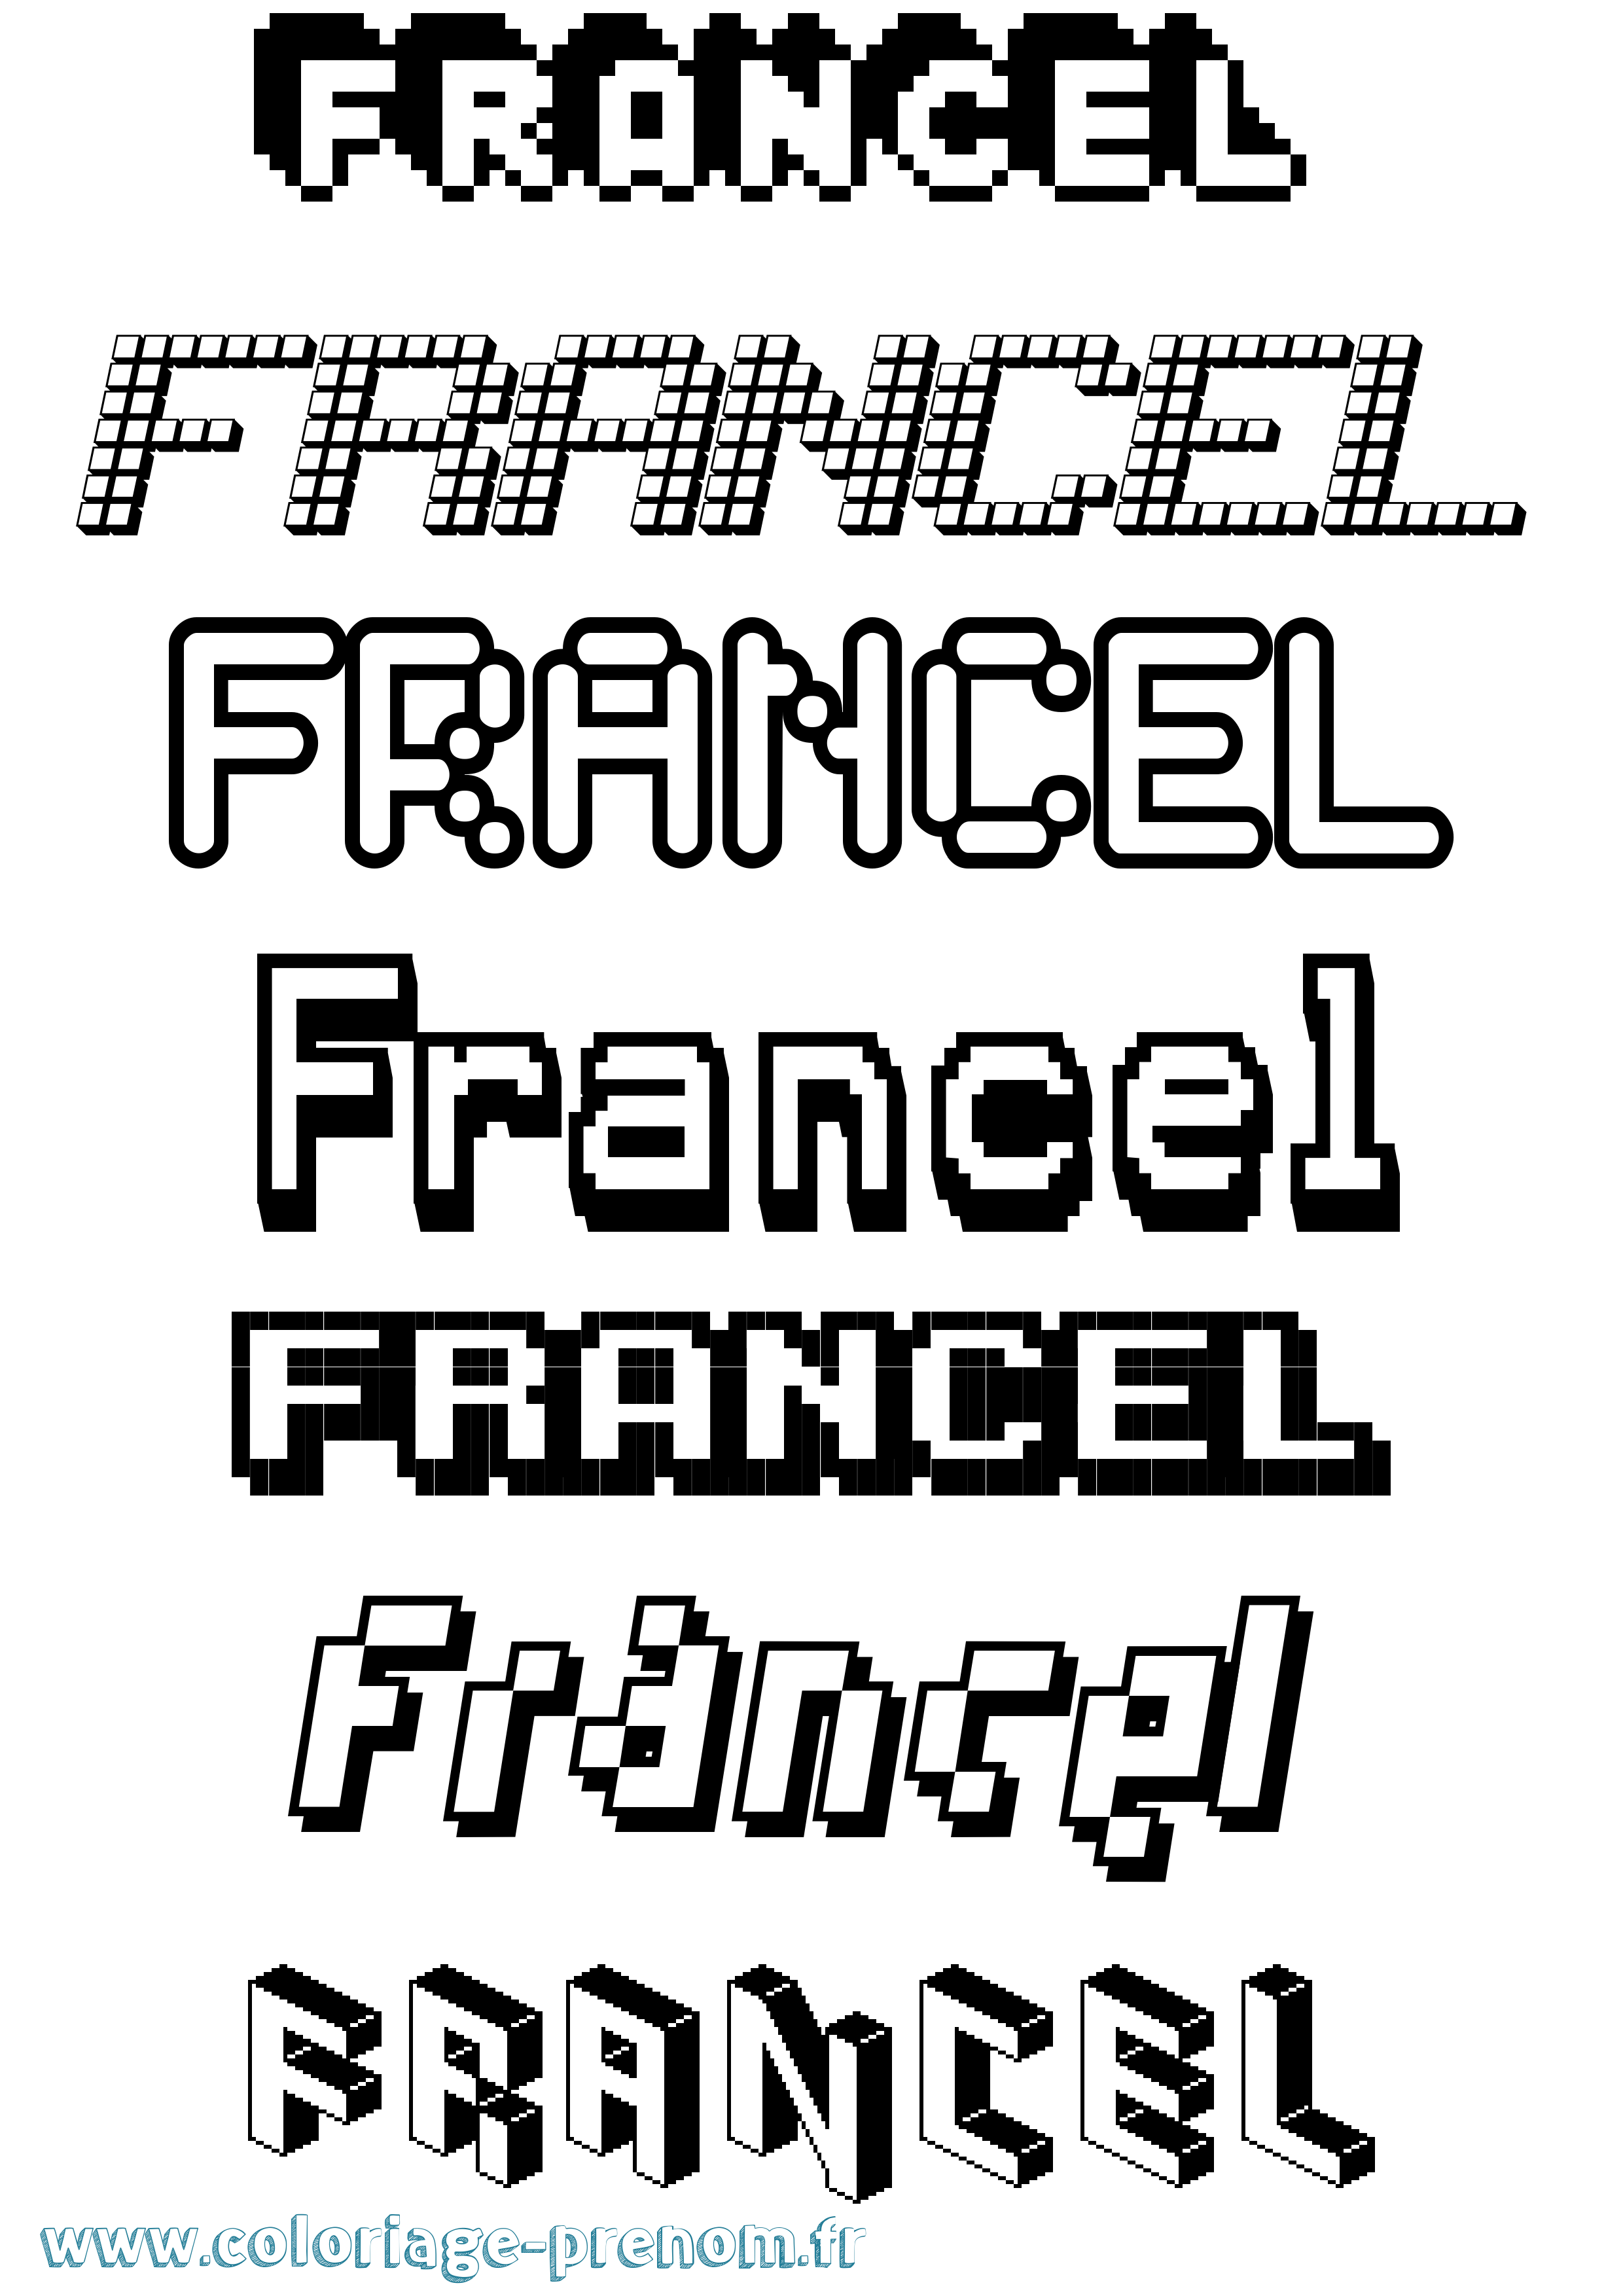 Coloriage prénom Francel Pixel